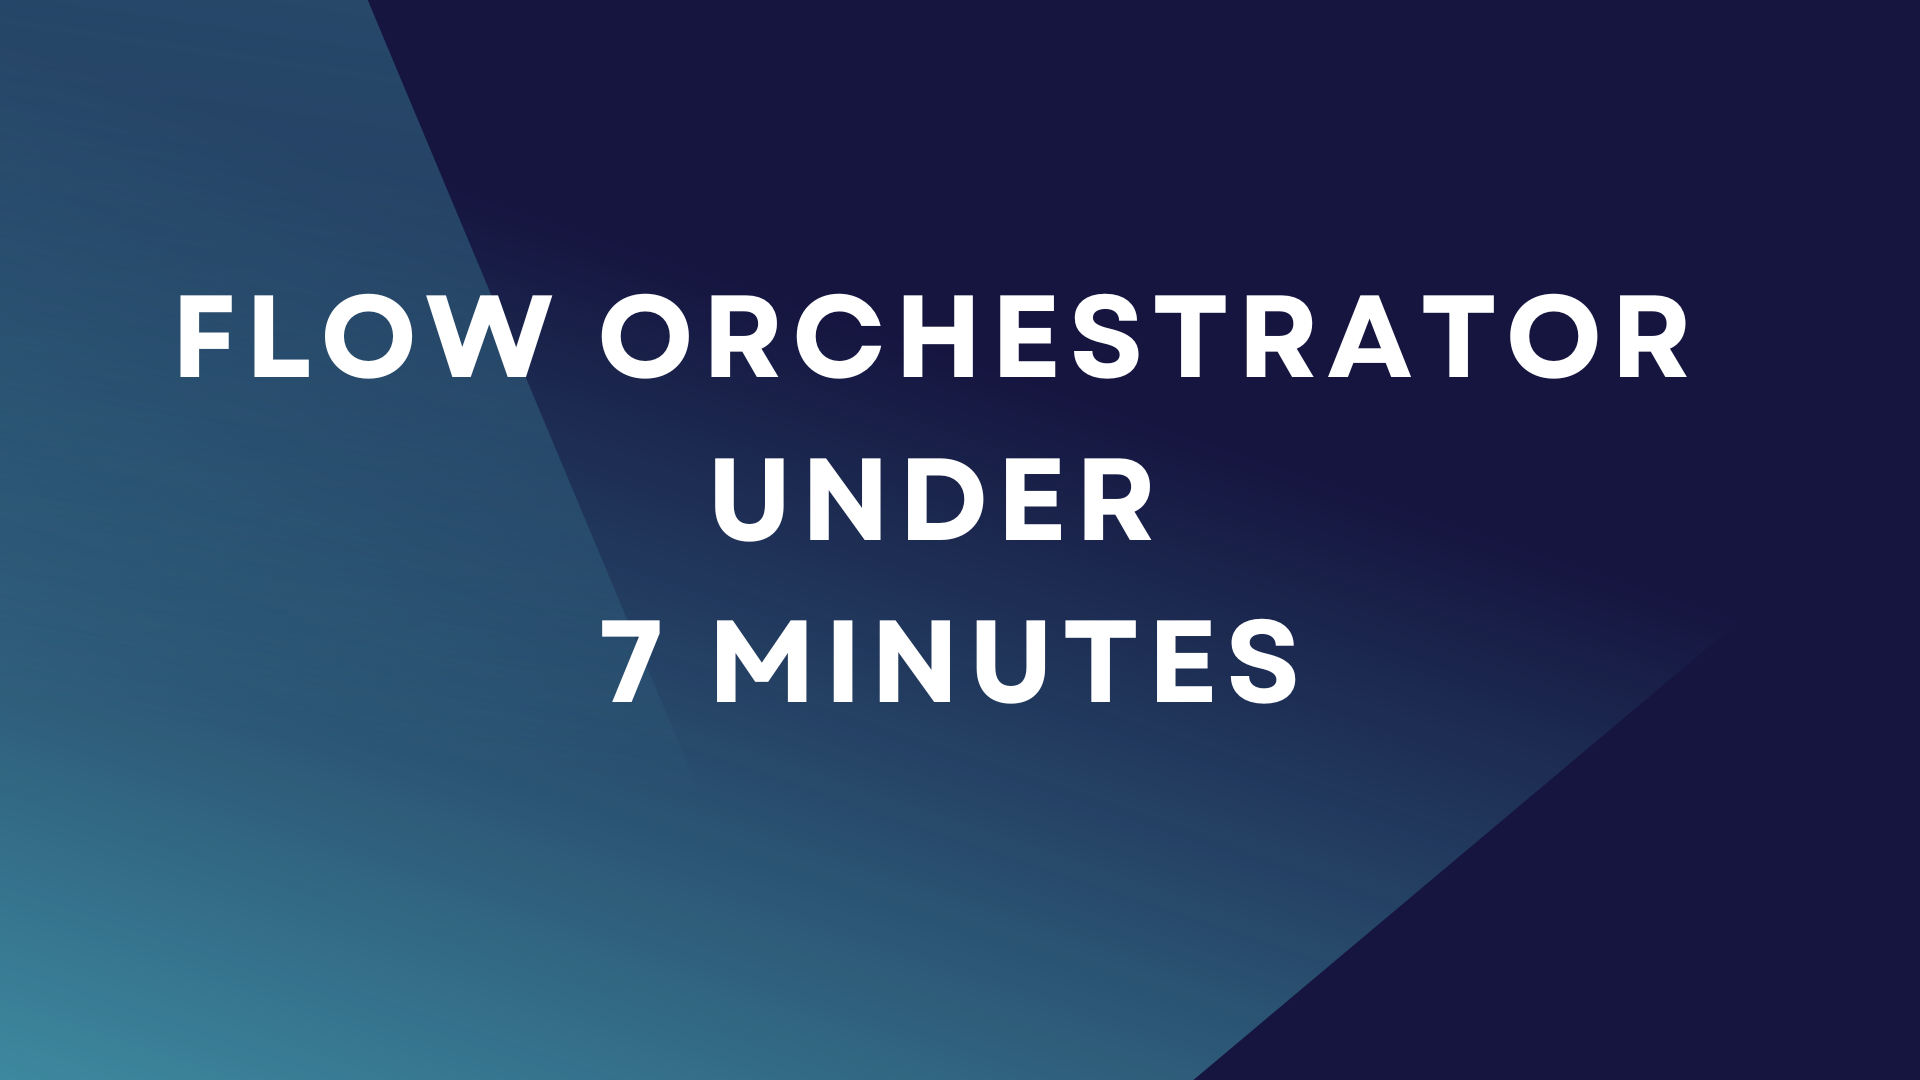 Flow Orchestrator under 7 Minutes